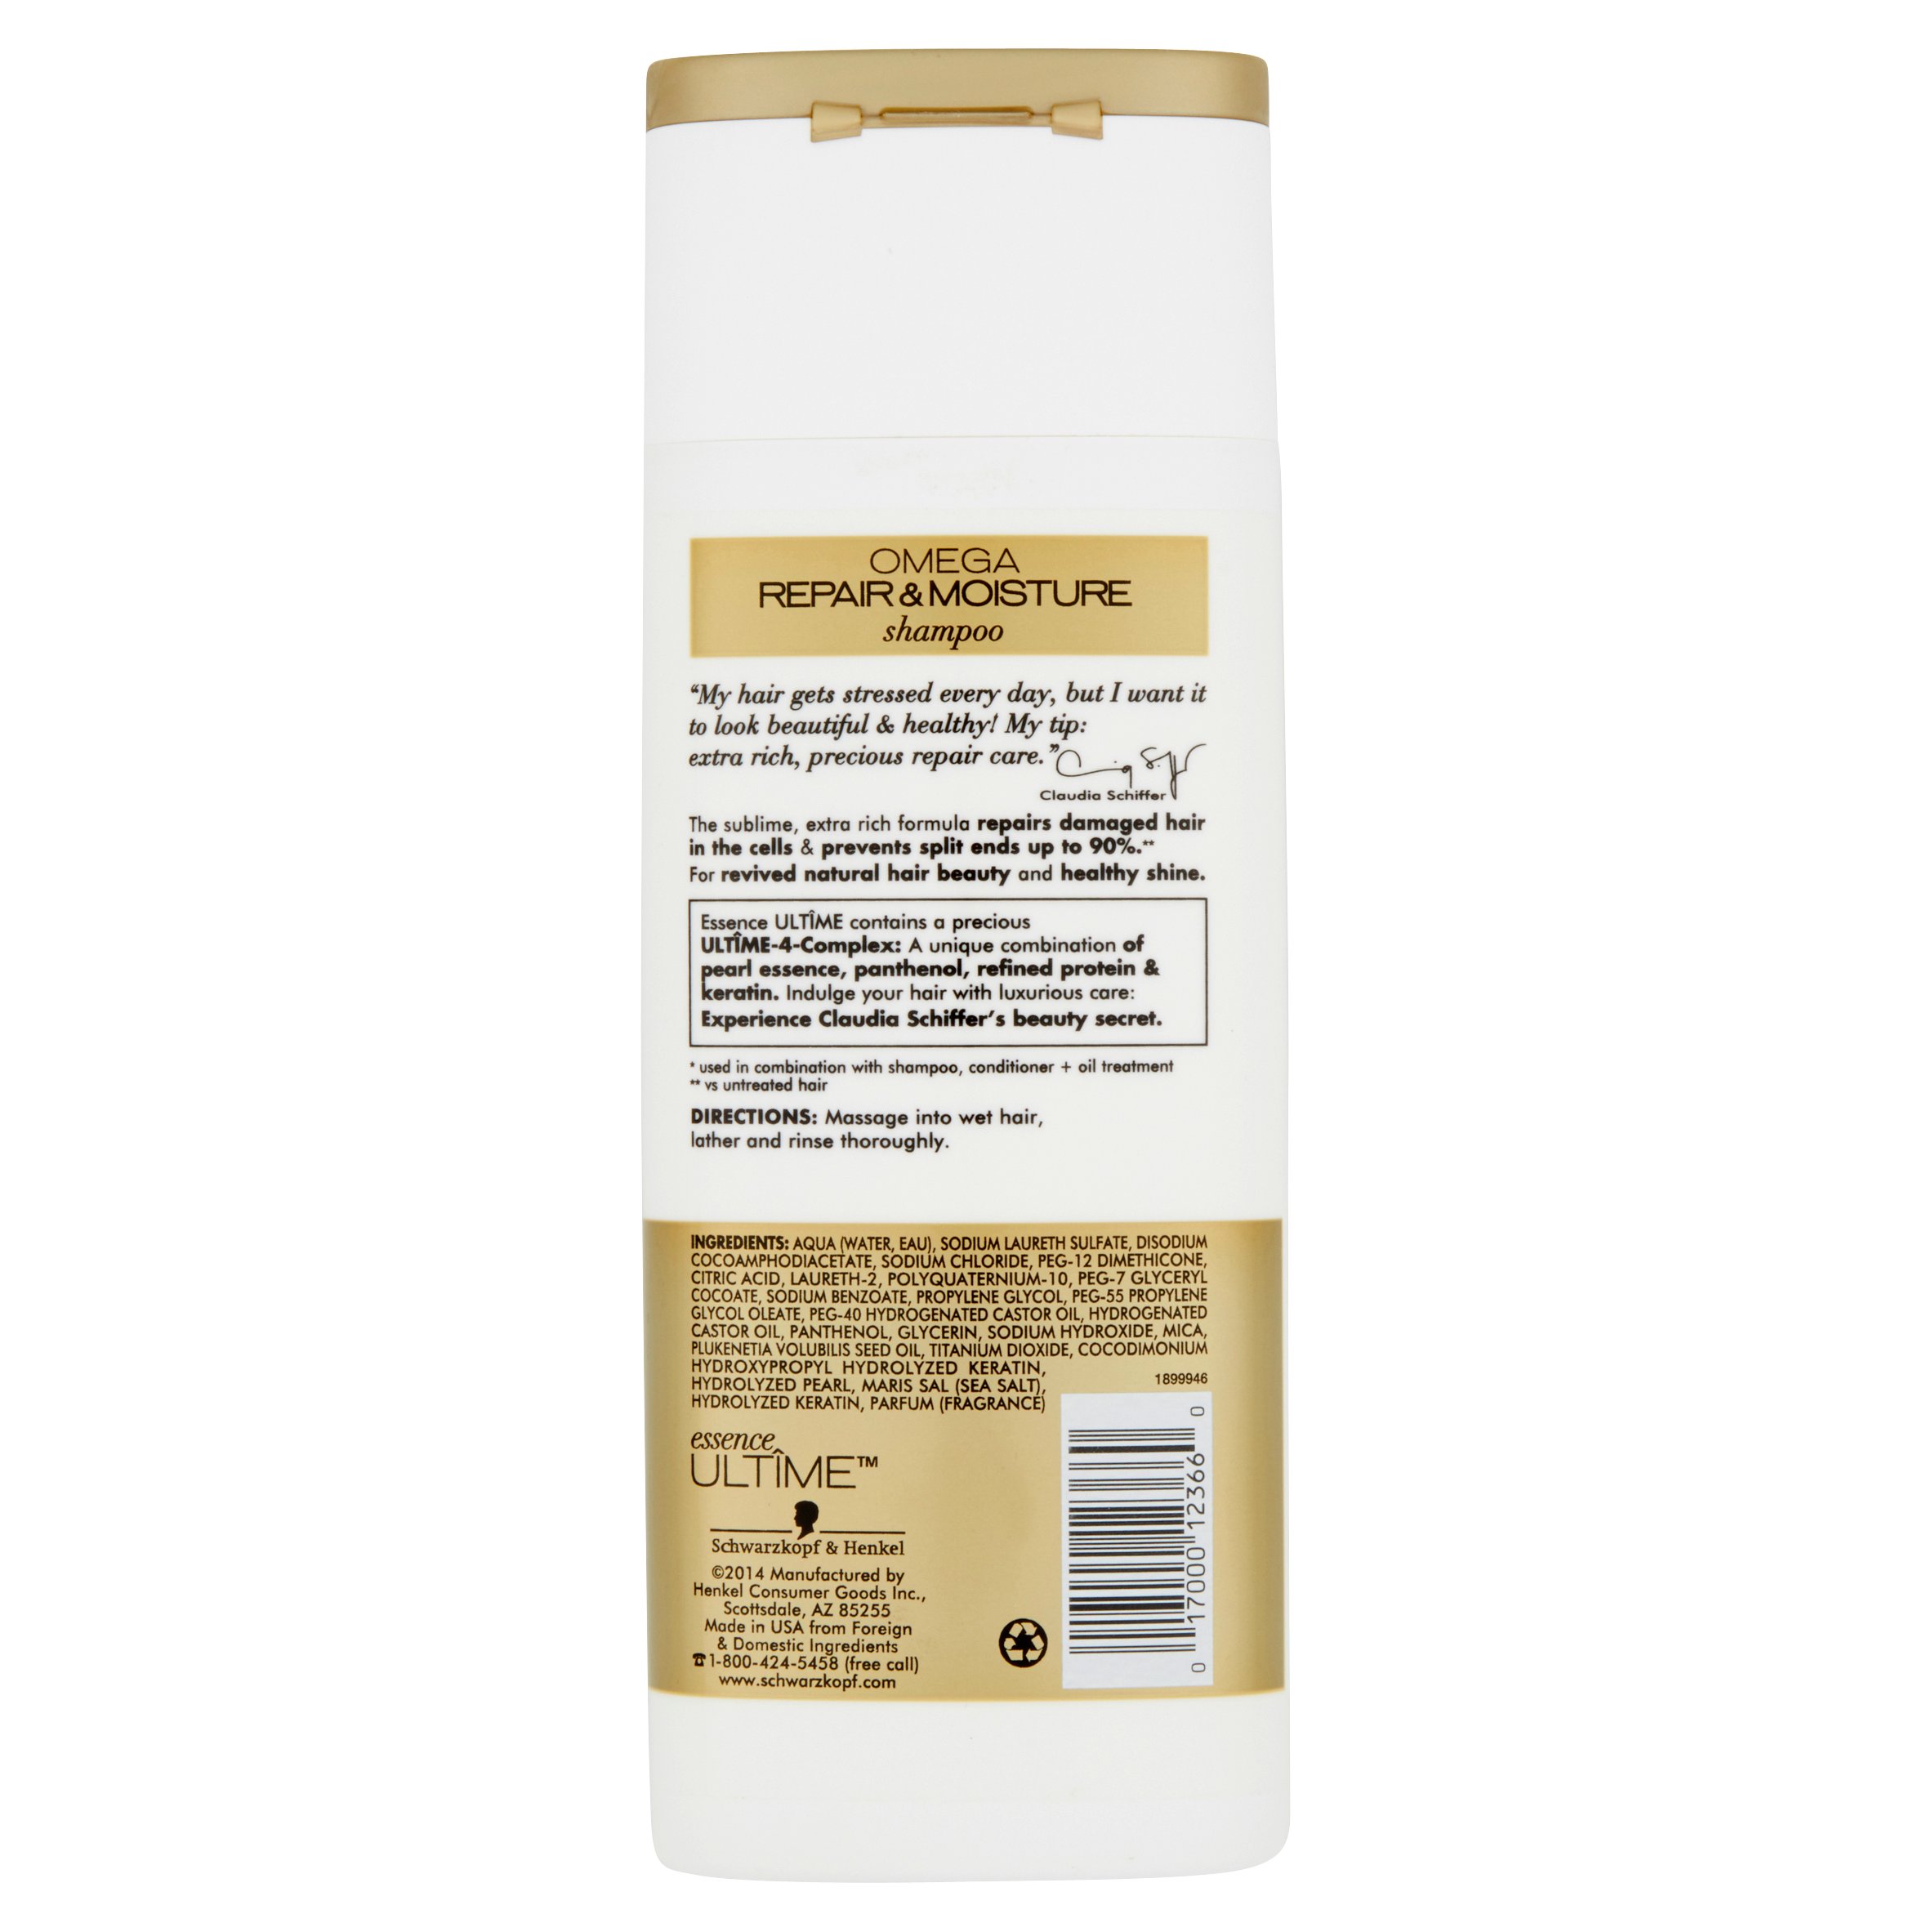 Schwarzkopf Essence Ultime Omega Repair & Moisture Shampoo, 13.5 Oz - image 4 of 5